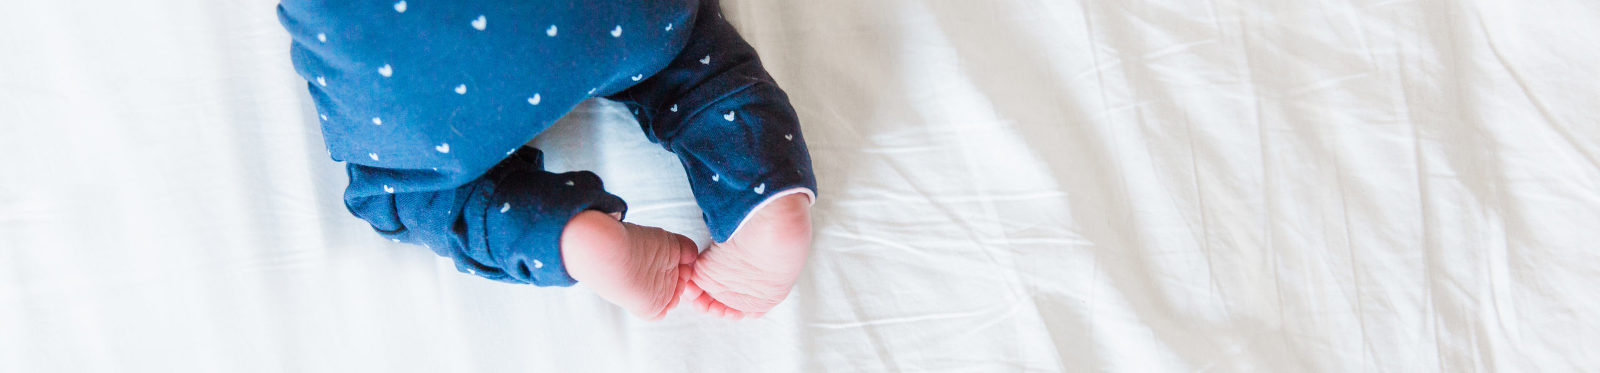 newbornfotografie noord Holland baby voetjes